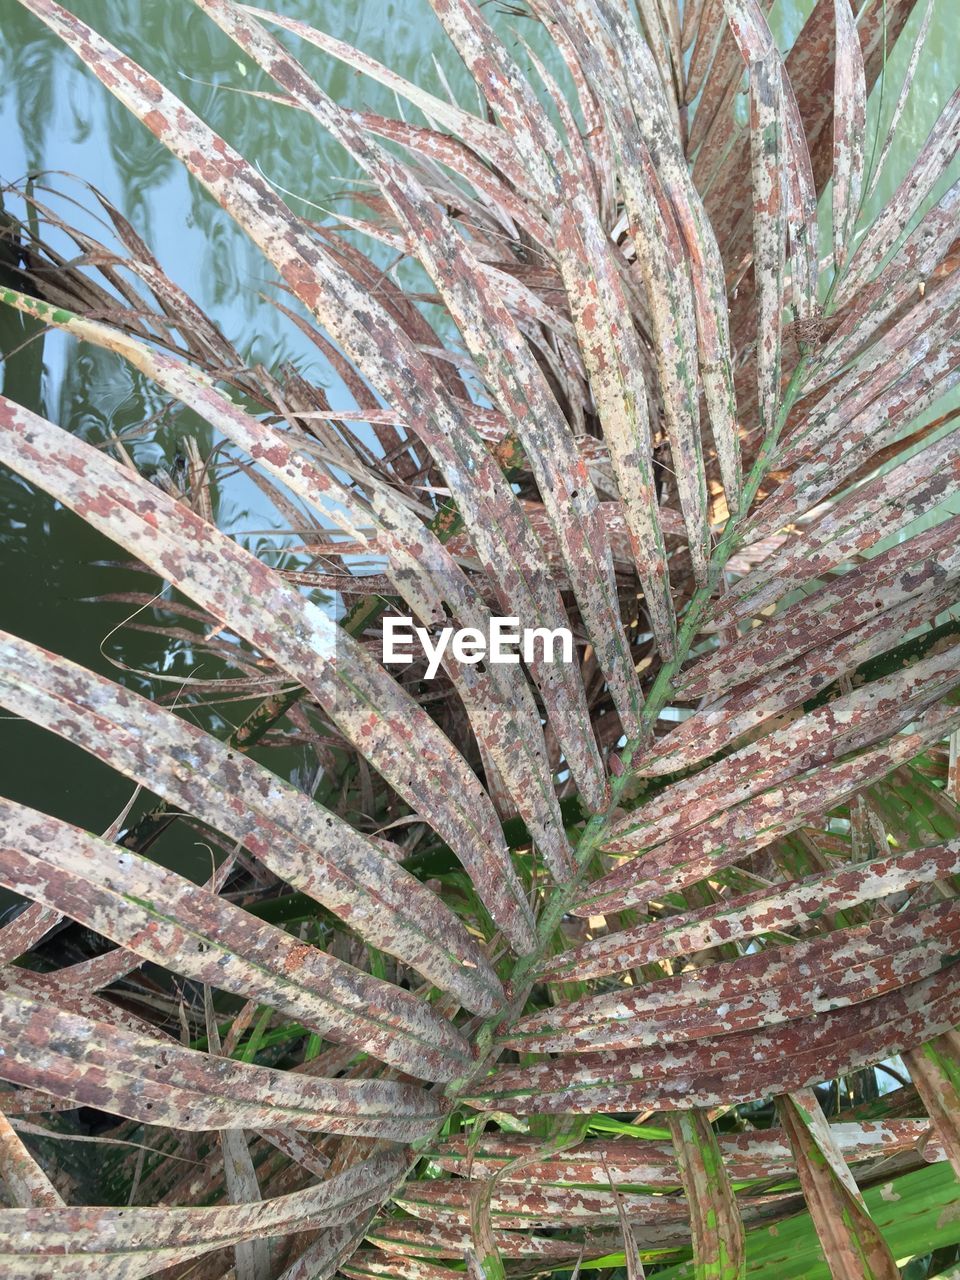 HIGH ANGLE VIEW OF PALM TREE